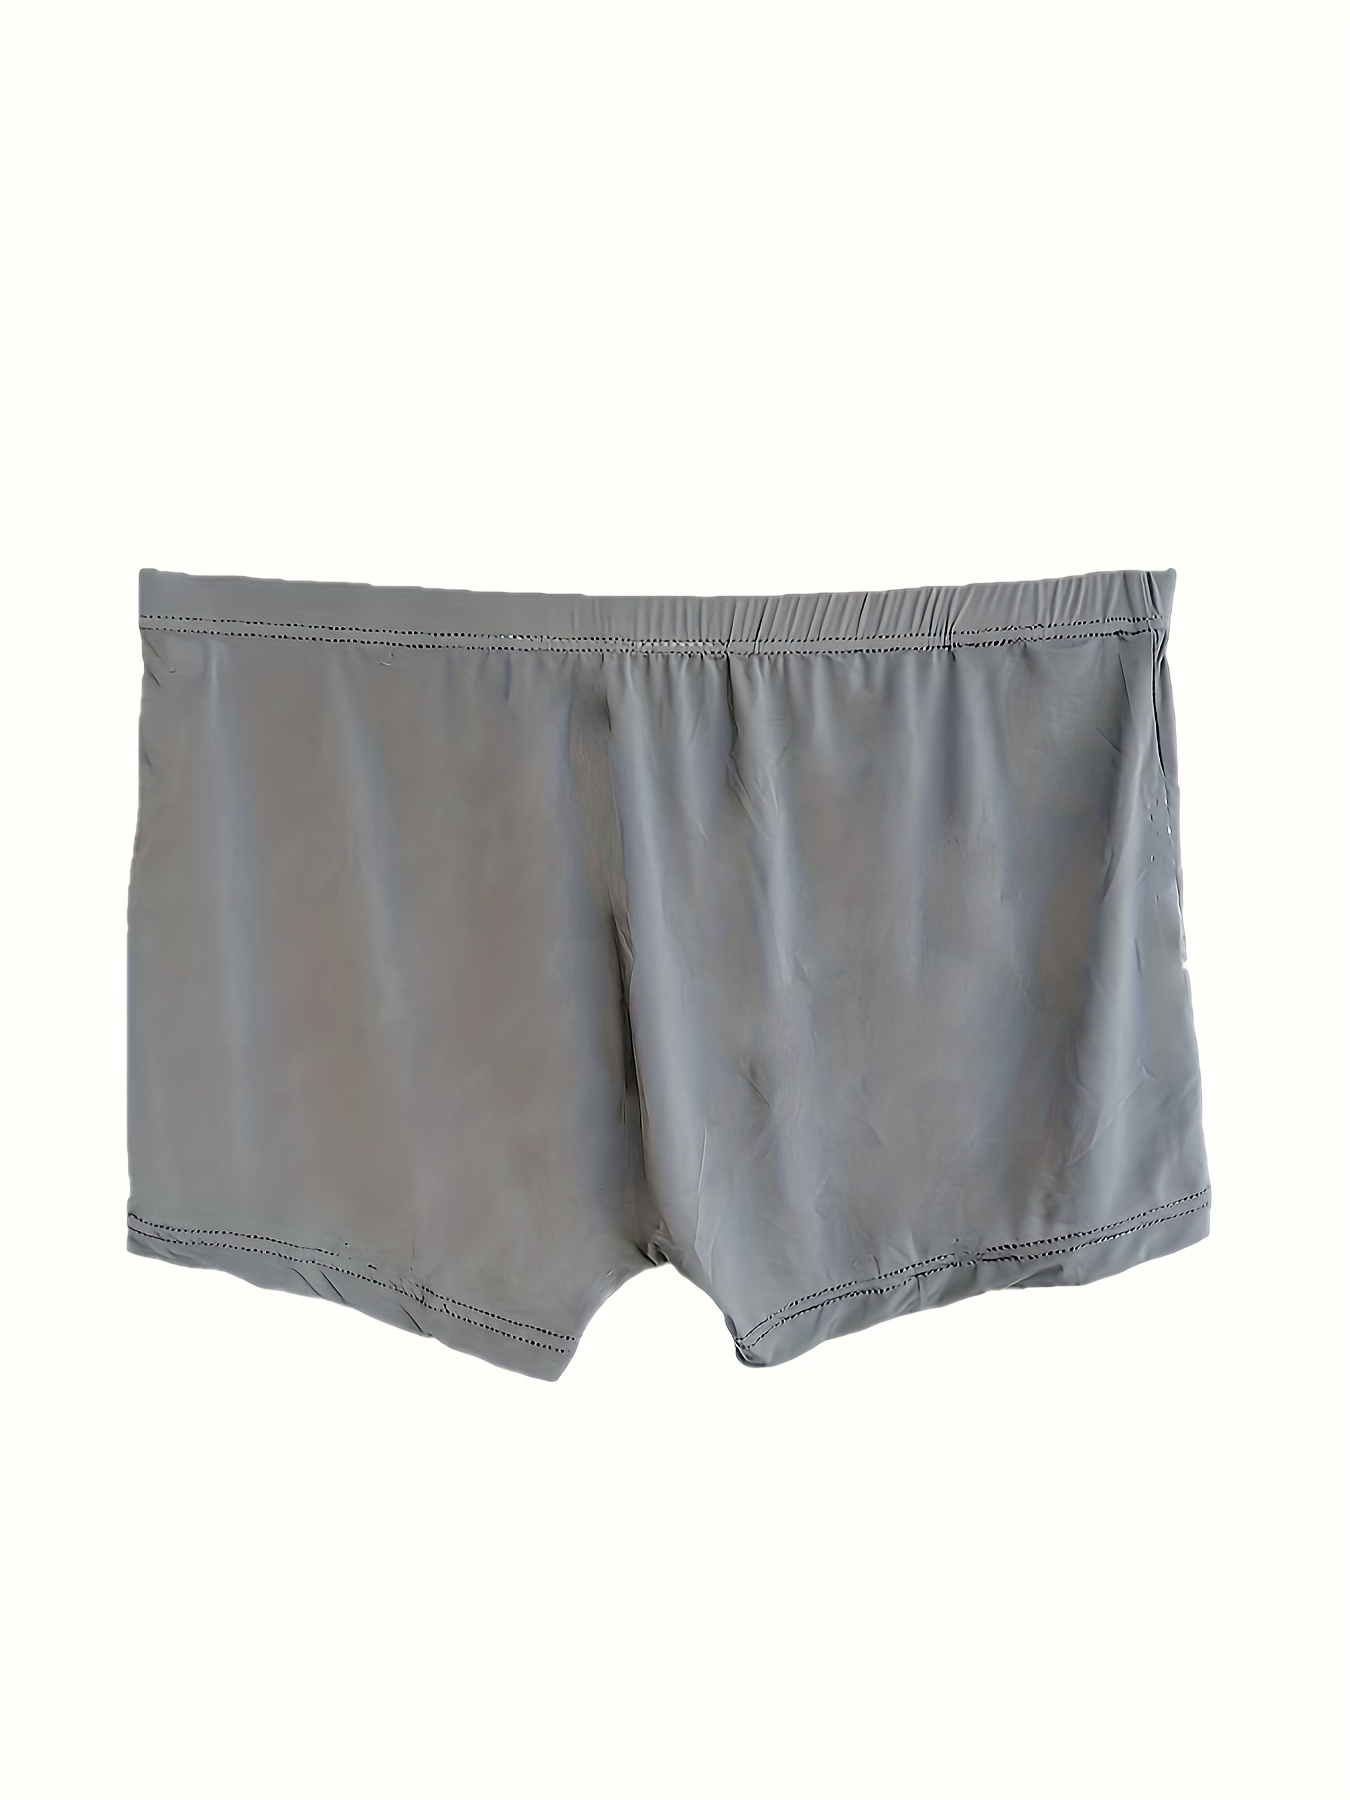 JDEFEG Mi Undies Men Men 3 Piece Brief Summer Thin Transparent Underpant  Ice Silk Boxers Breathable Waists Pant Underwear Mens Thermal Underwear  Pants